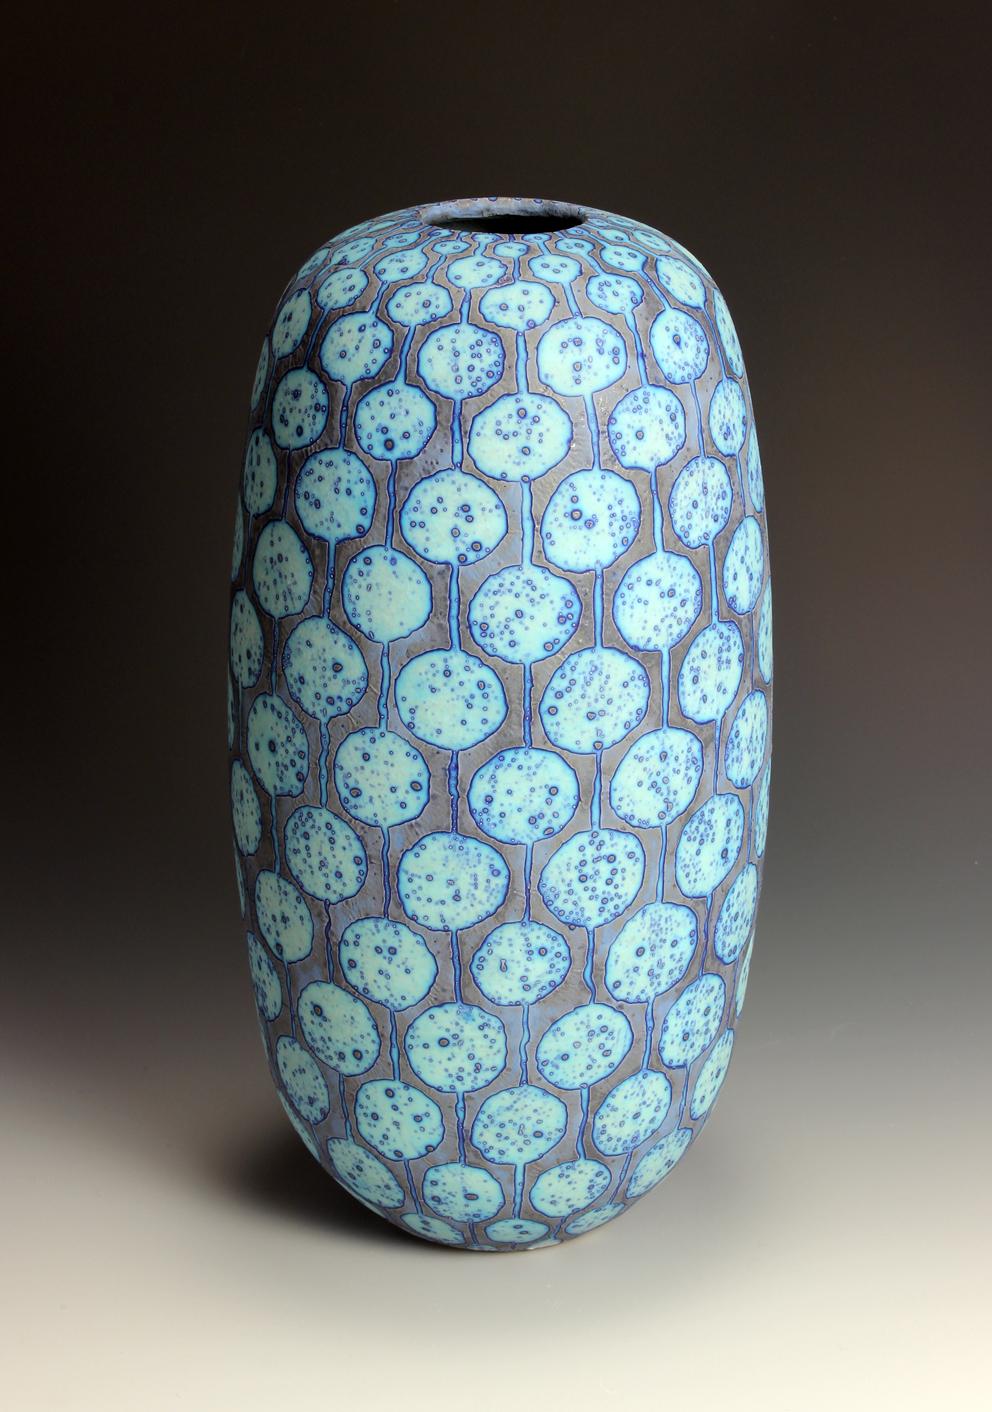 Contemporary Peter Beard 1970s inspired Vase